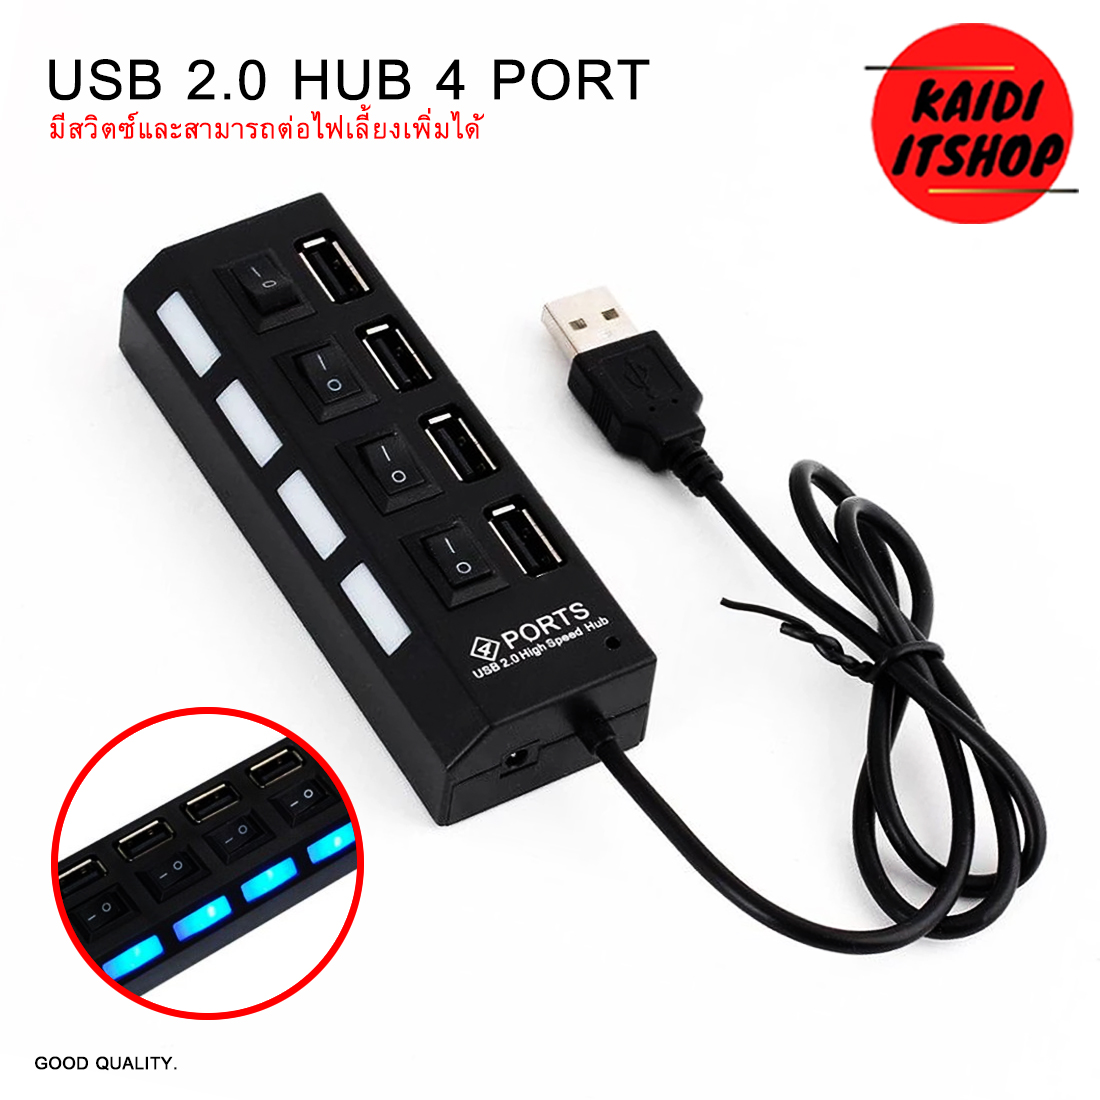 USB hub 2.0 มีช่อง USB 4 ช่อง มีสวิตซ์ สำหรับเปิด-ปิด สามารถต่อไฟเลี้ยงเพิ่มได้ USB 2.0 High Speed 4 Port Power On/Off Switch LED Hub For PC Laptop Notebook